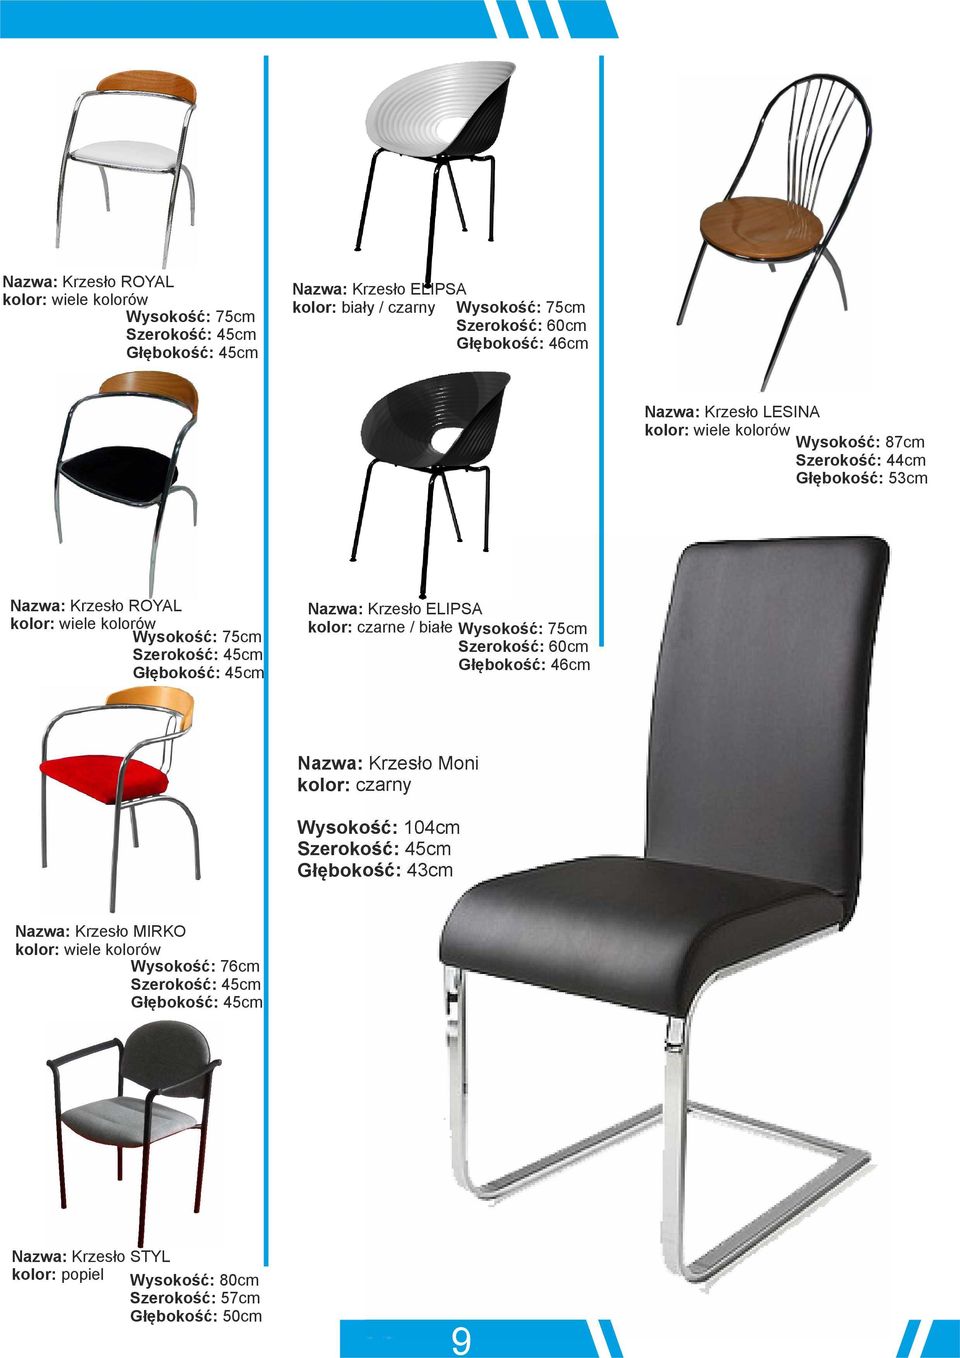 Głębokość: 45cm Krzesło ELIPSA kolor: czarne / białe Wysokość: 75cm Głębokość: 46cm Krzesło Moni kolor: czarny Wysokość: 104cm Szerokość: 45cm